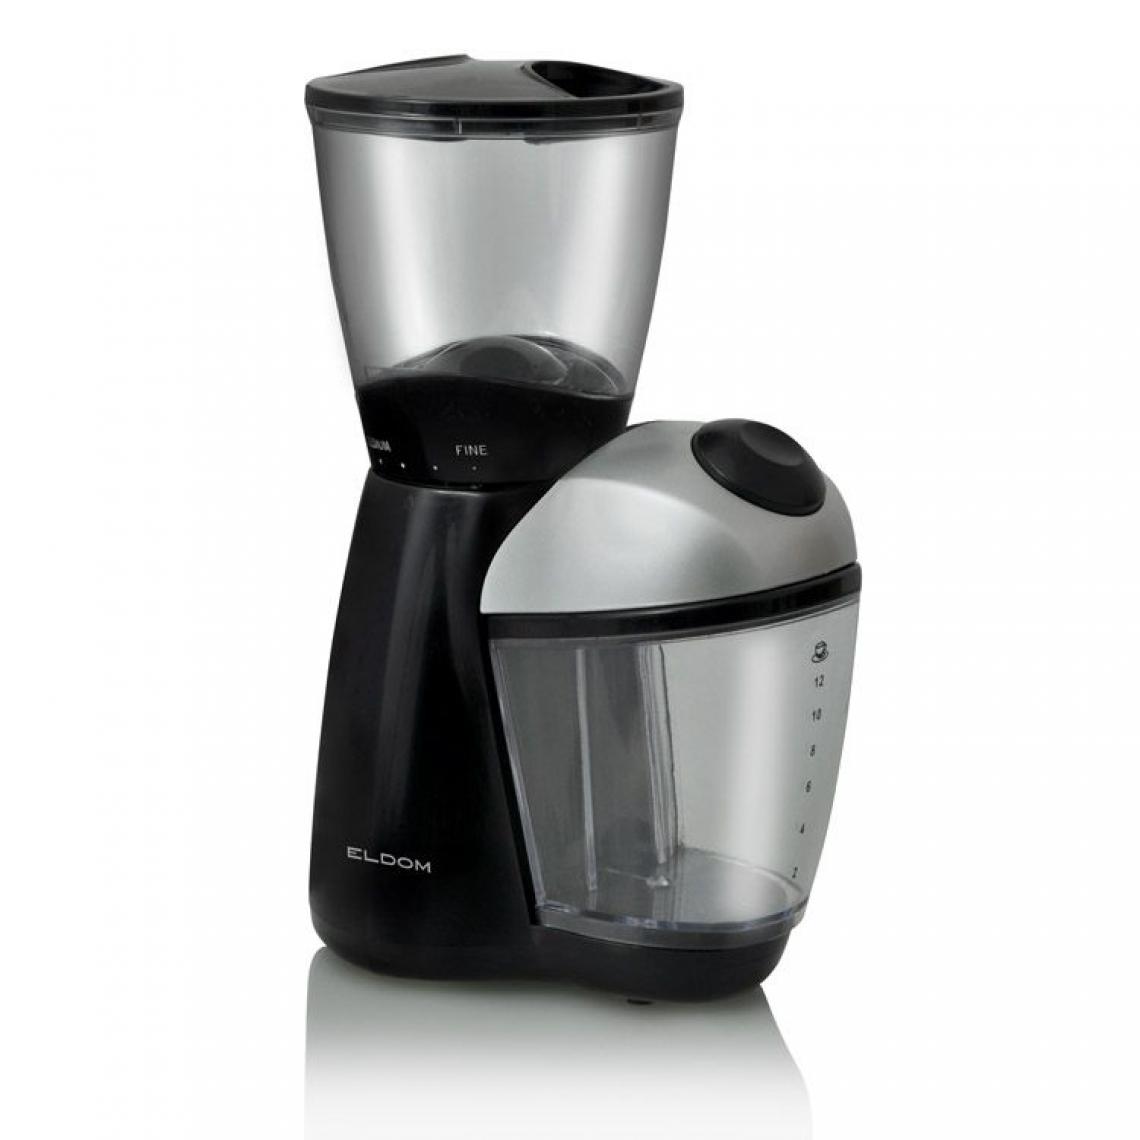 Eldom - ELDOM MK150 COFFEA coffee grinder, 100 W, ceramic burrs, 3 grinding thicknesses - Moulin à café